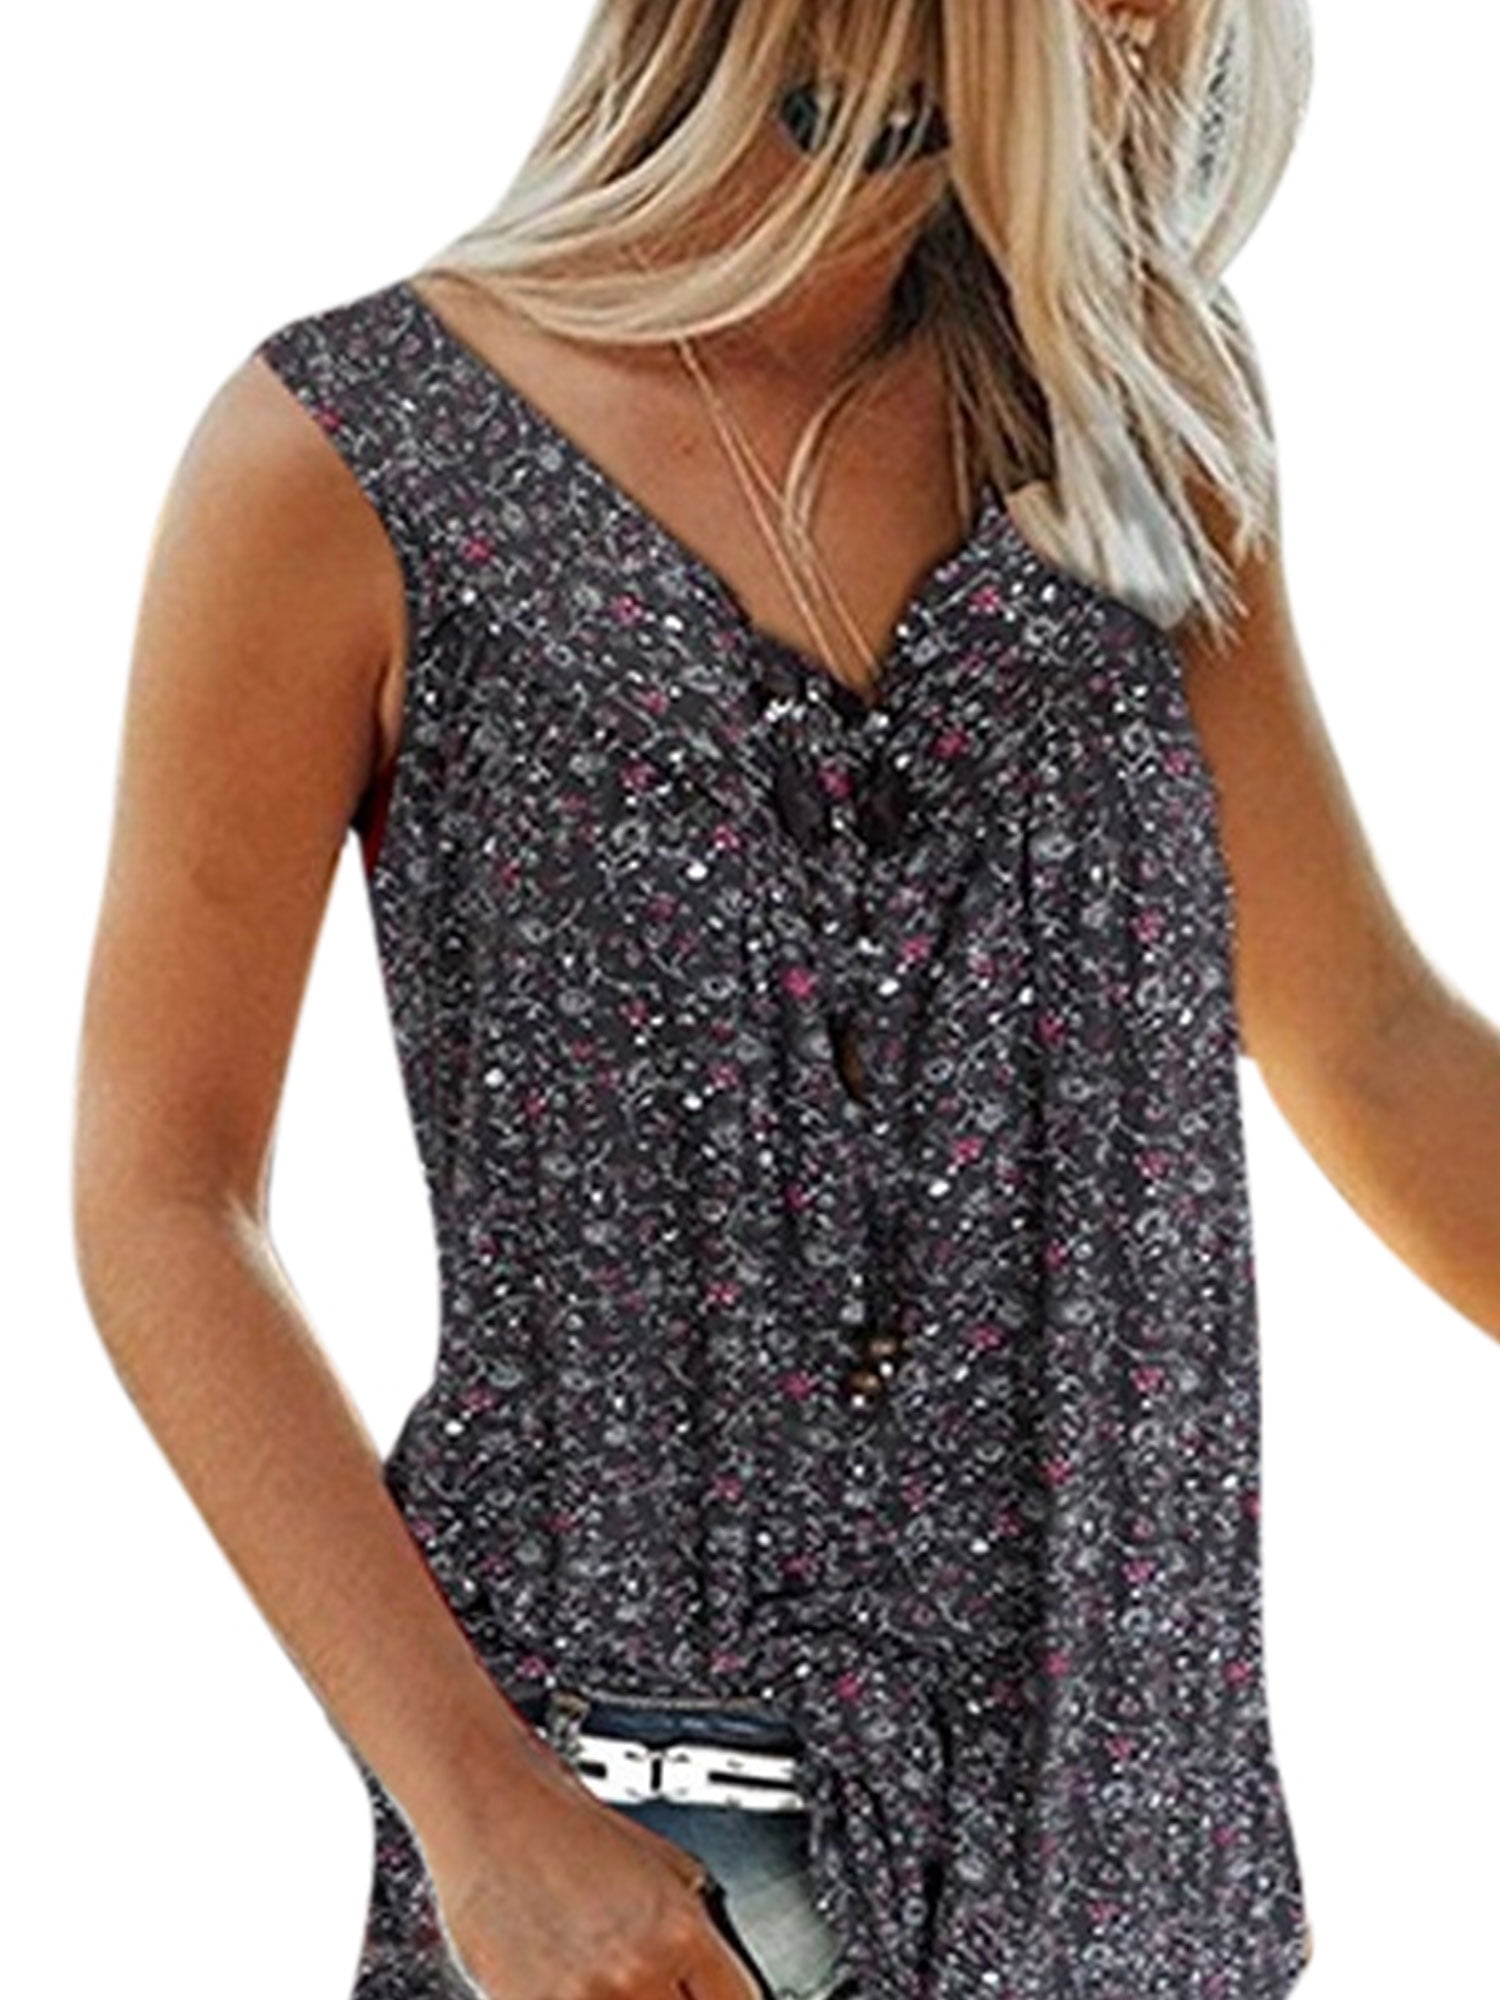 HUUSA Women Summer V Neck Lace Tank Tops Casual Loose Sleeveless Blouses Shirts